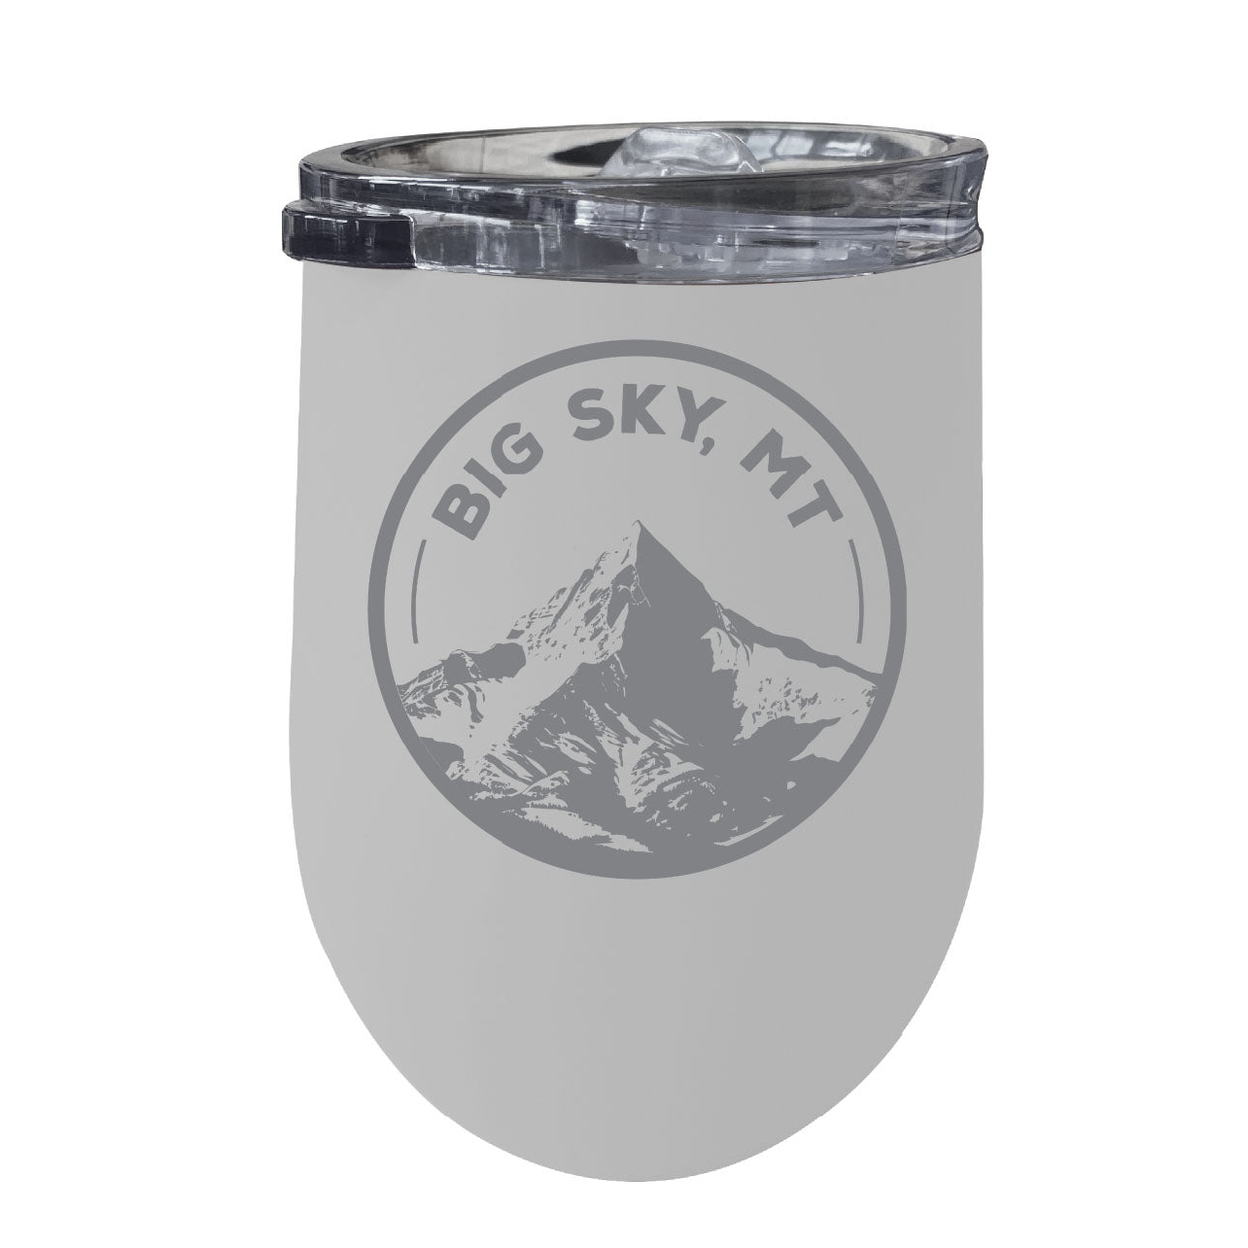 Big Sky Montana Souvenir 12 Oz Engraved Insulated Wine Stainless Steel Tumbler - White,,Single Unit